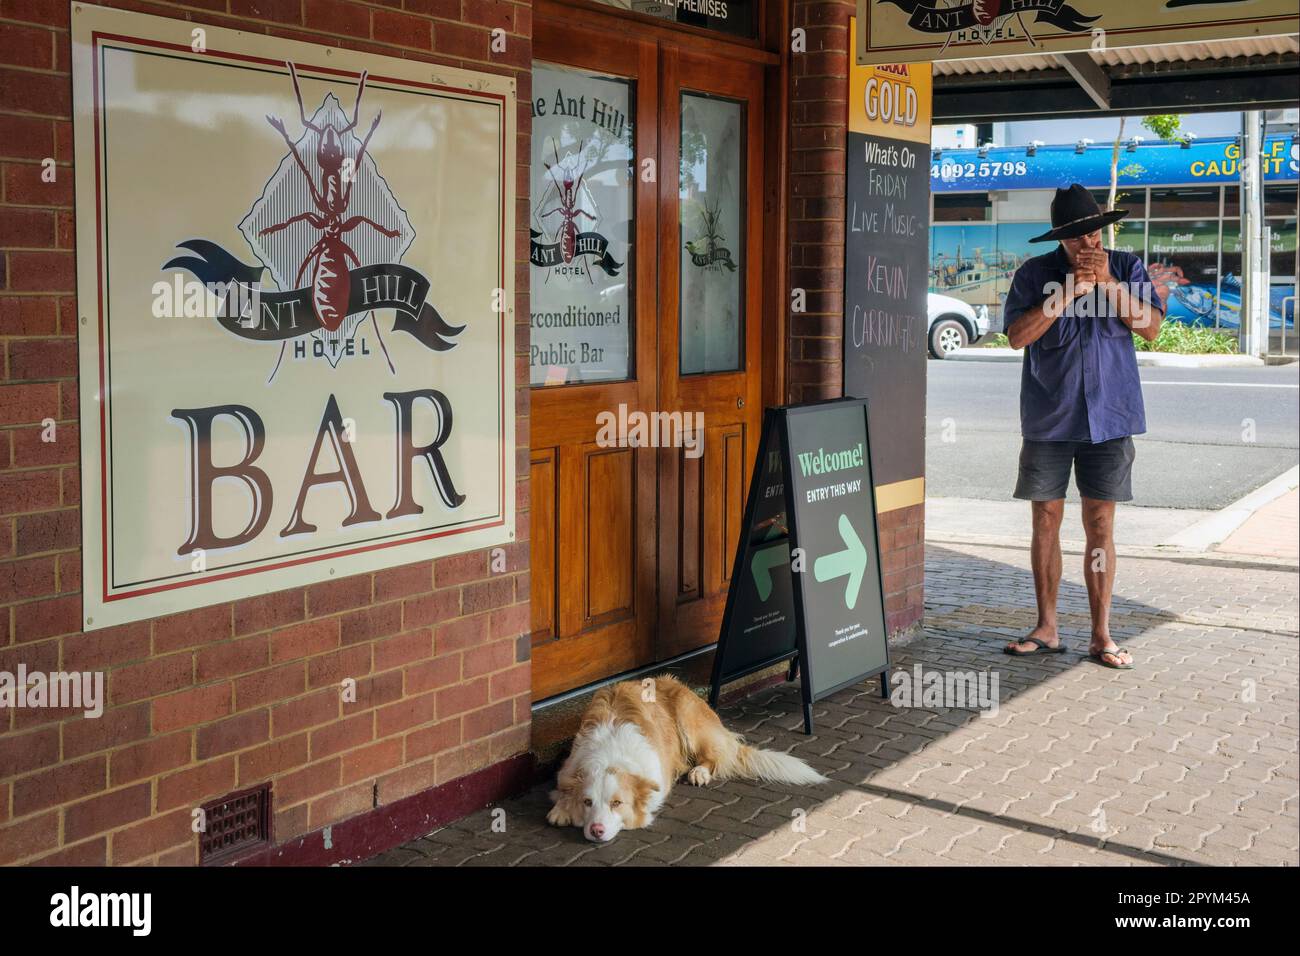 A sleepy dog and a man lighting a cigarette on a street corner in Mareeba, Queensland, Australia Stock Photo